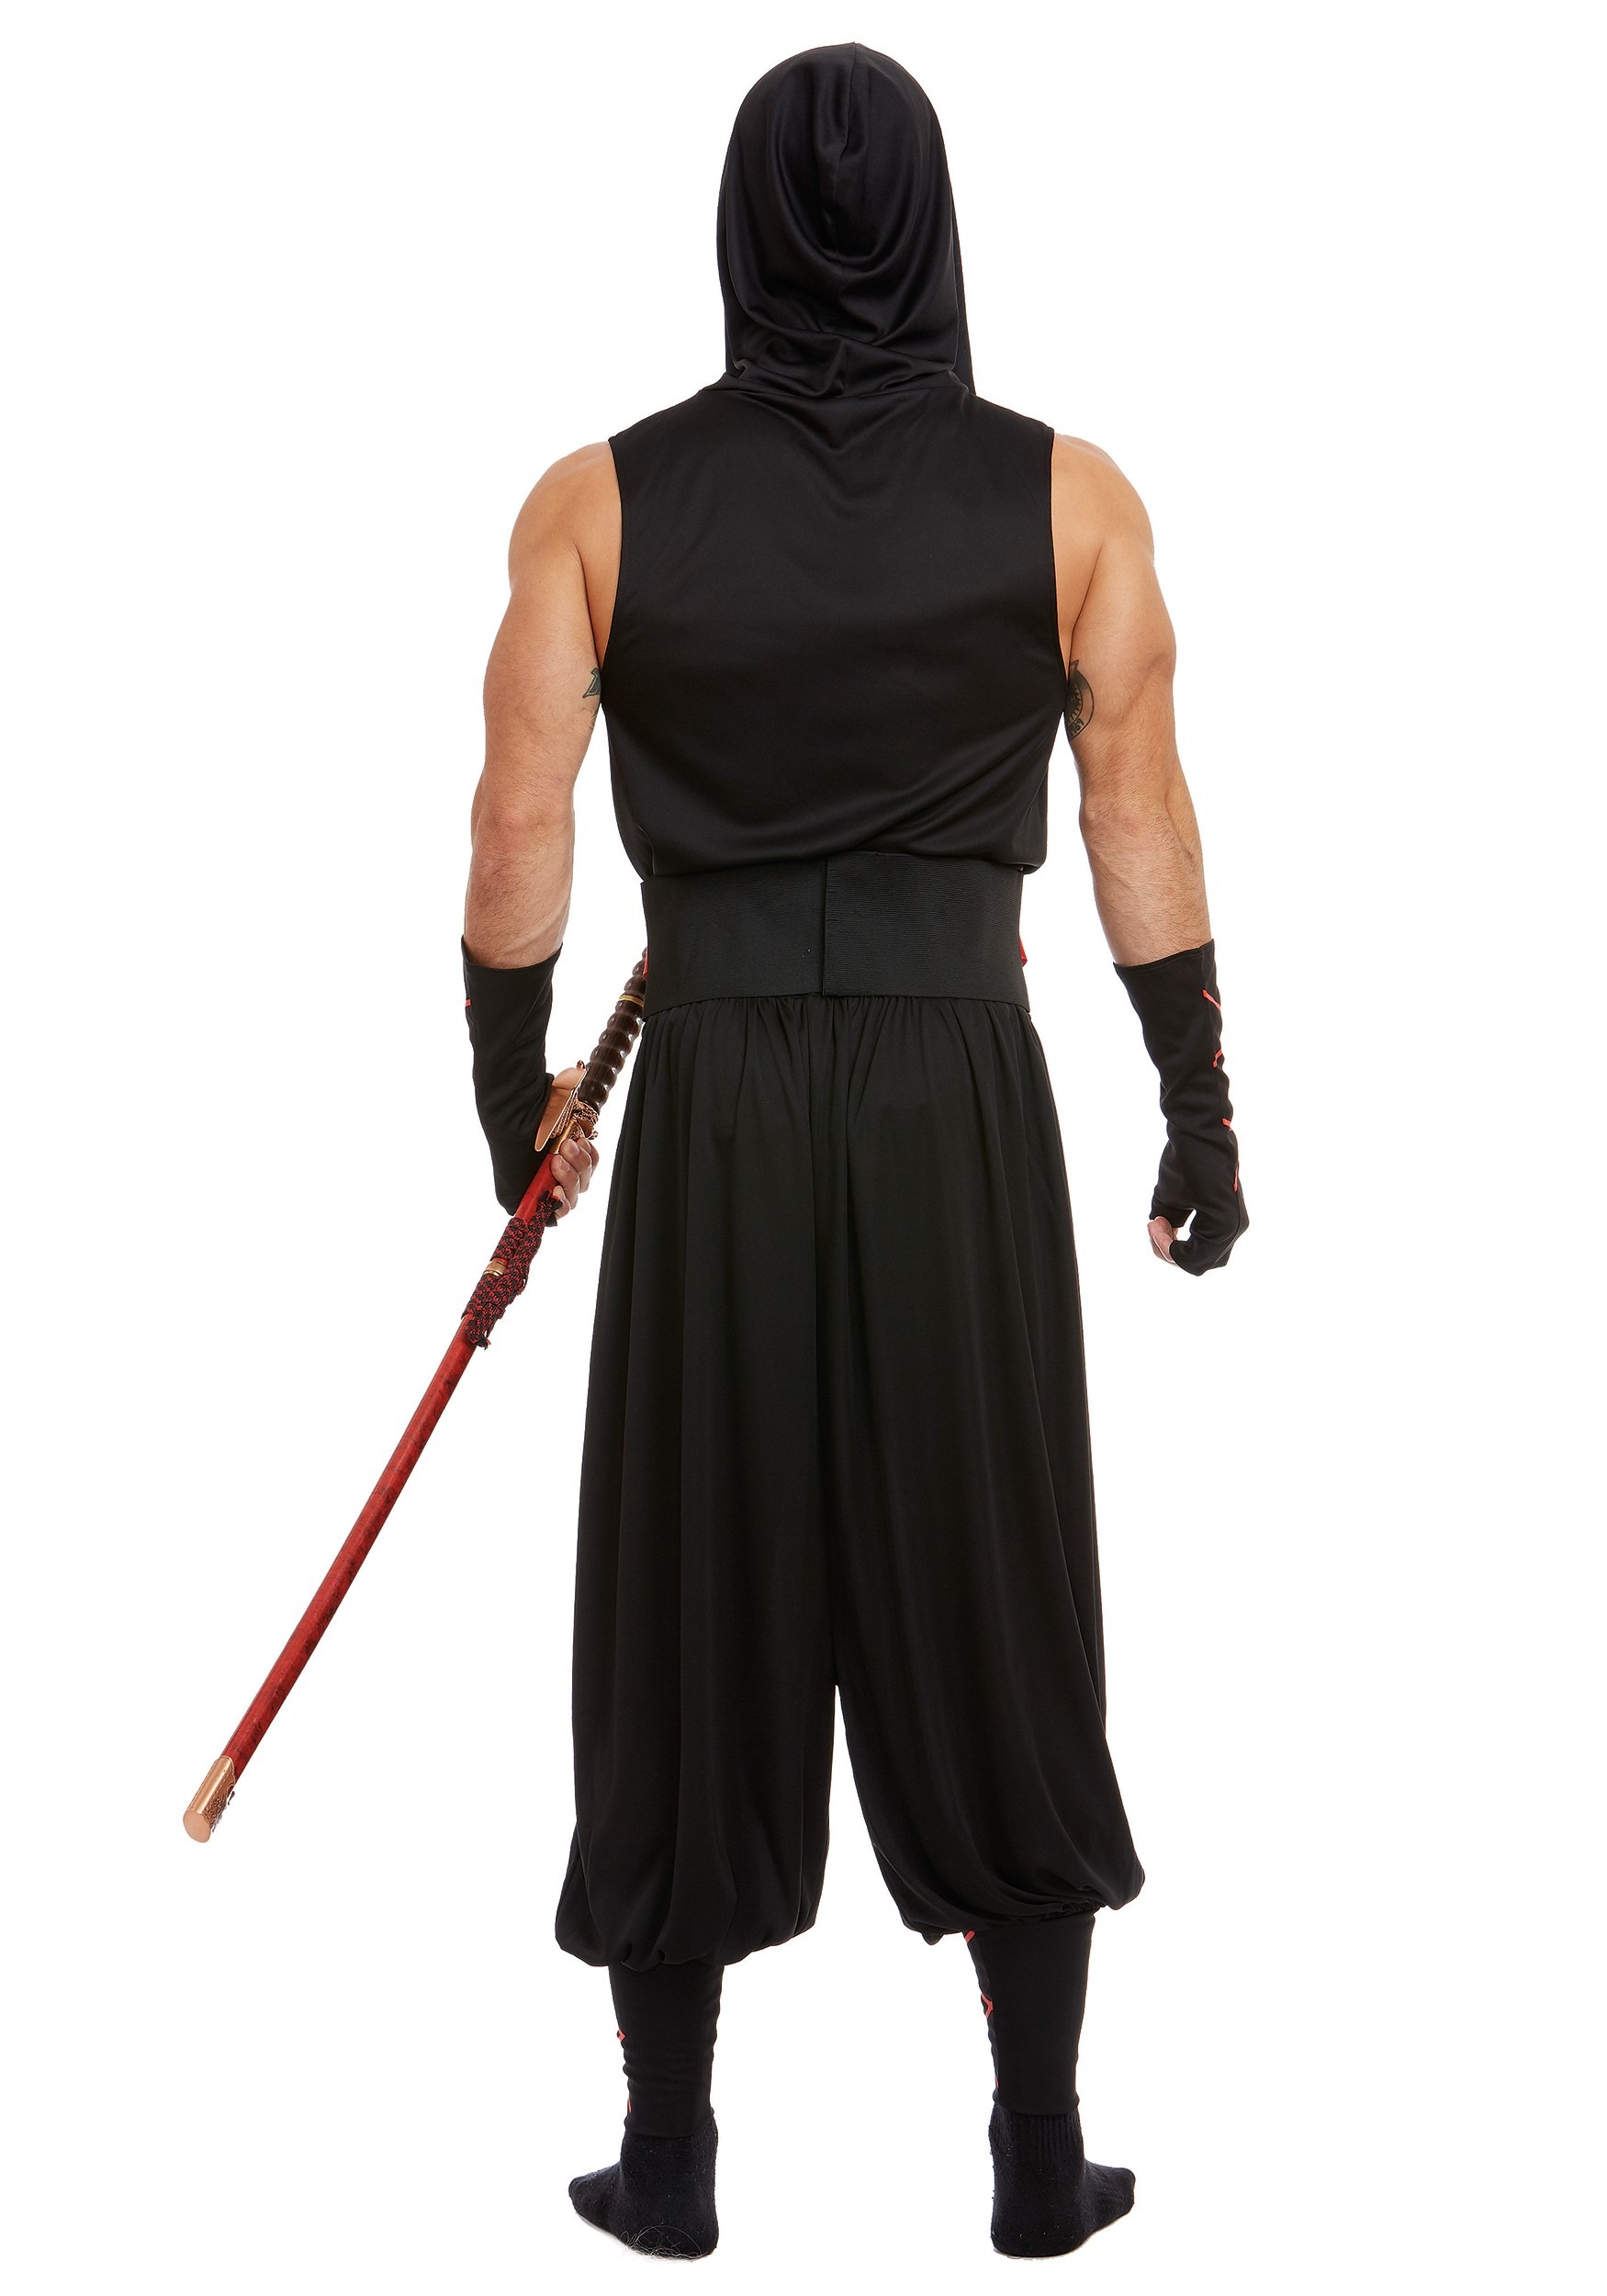 Sexy Ninja Costume for Men